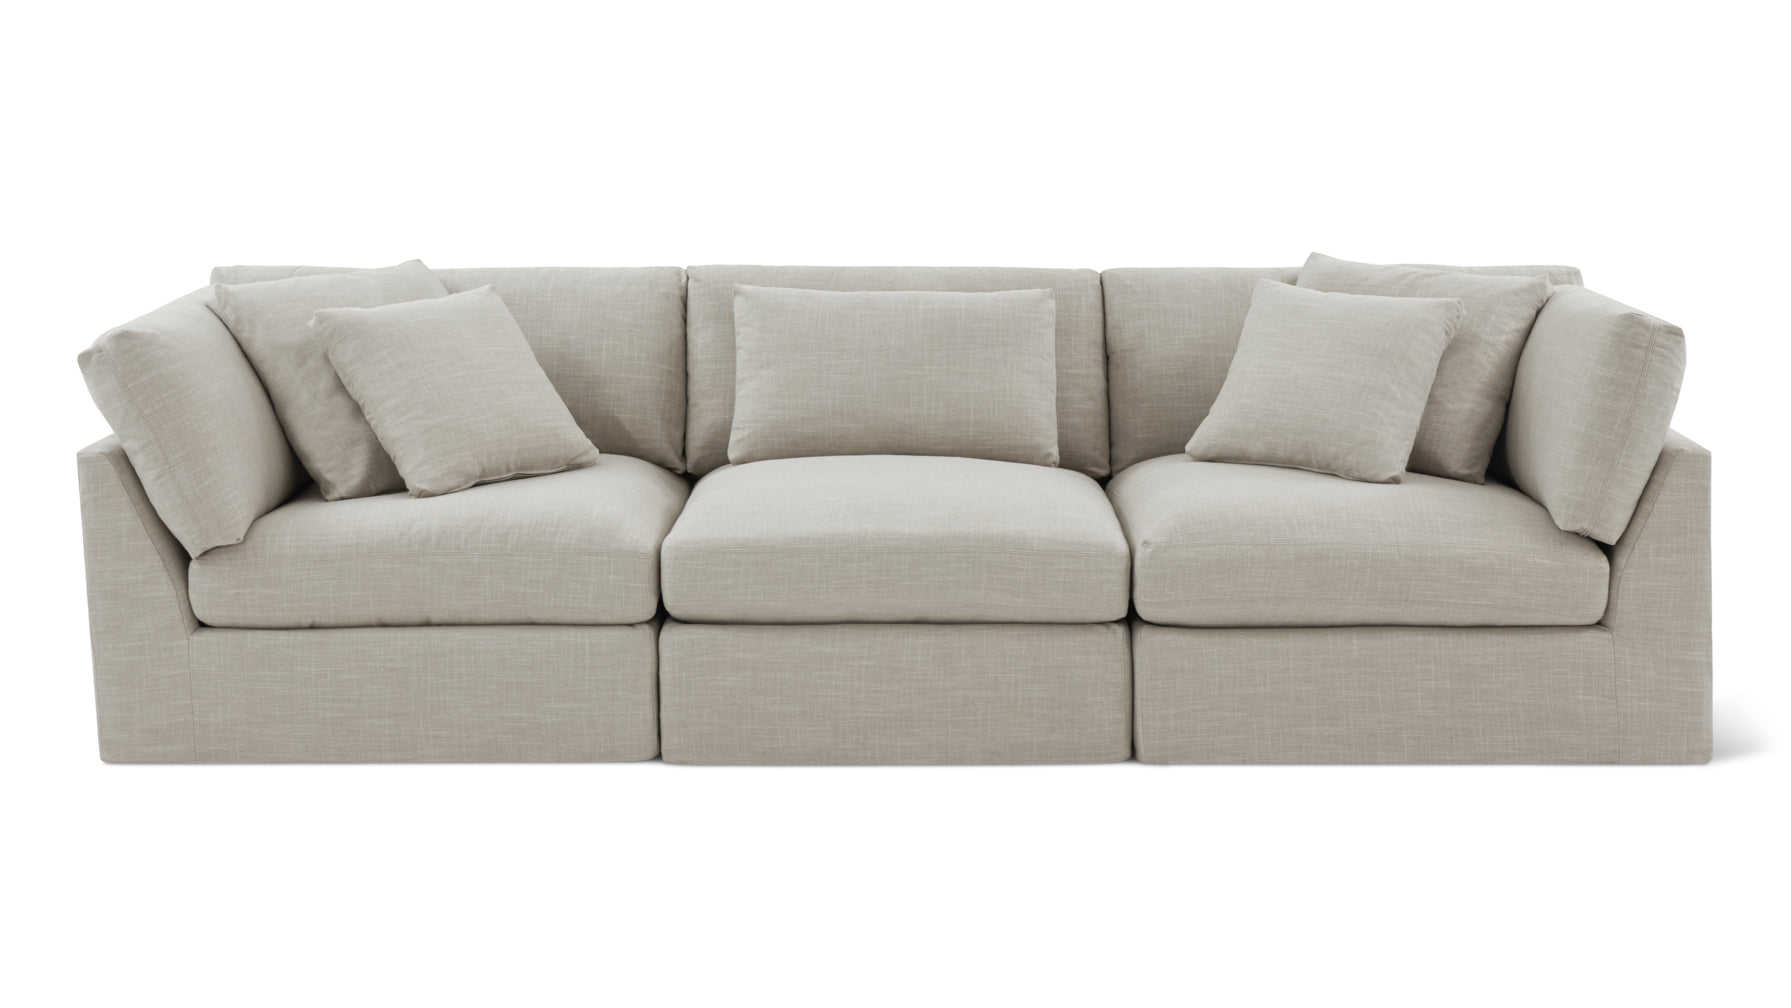 Get Together™ 3-Piece Modular Sofa, Large, Light Pebble - Image 1